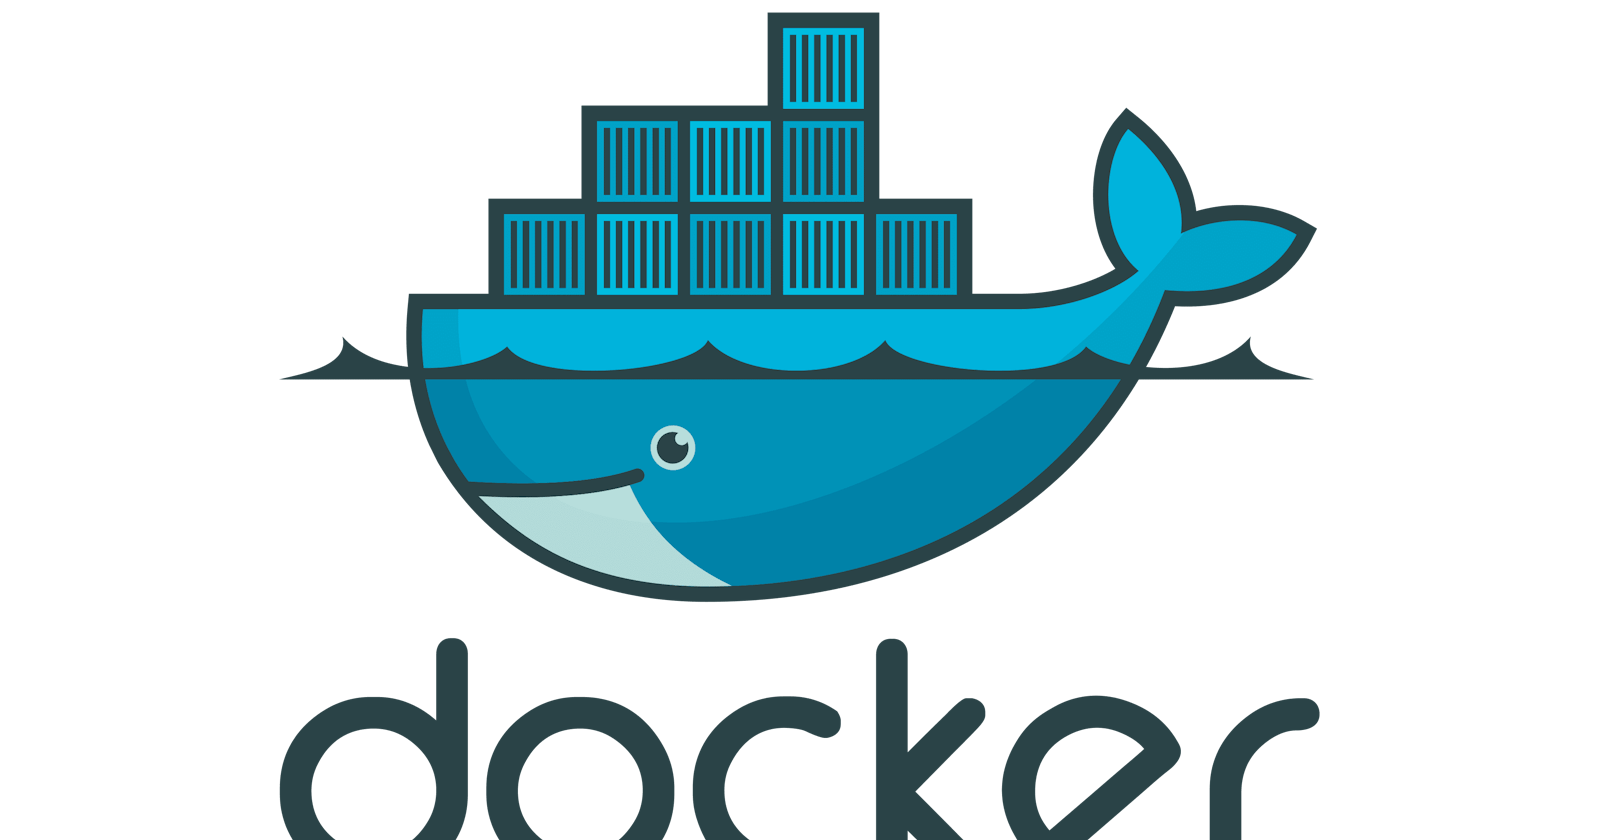 Popular Docker commands